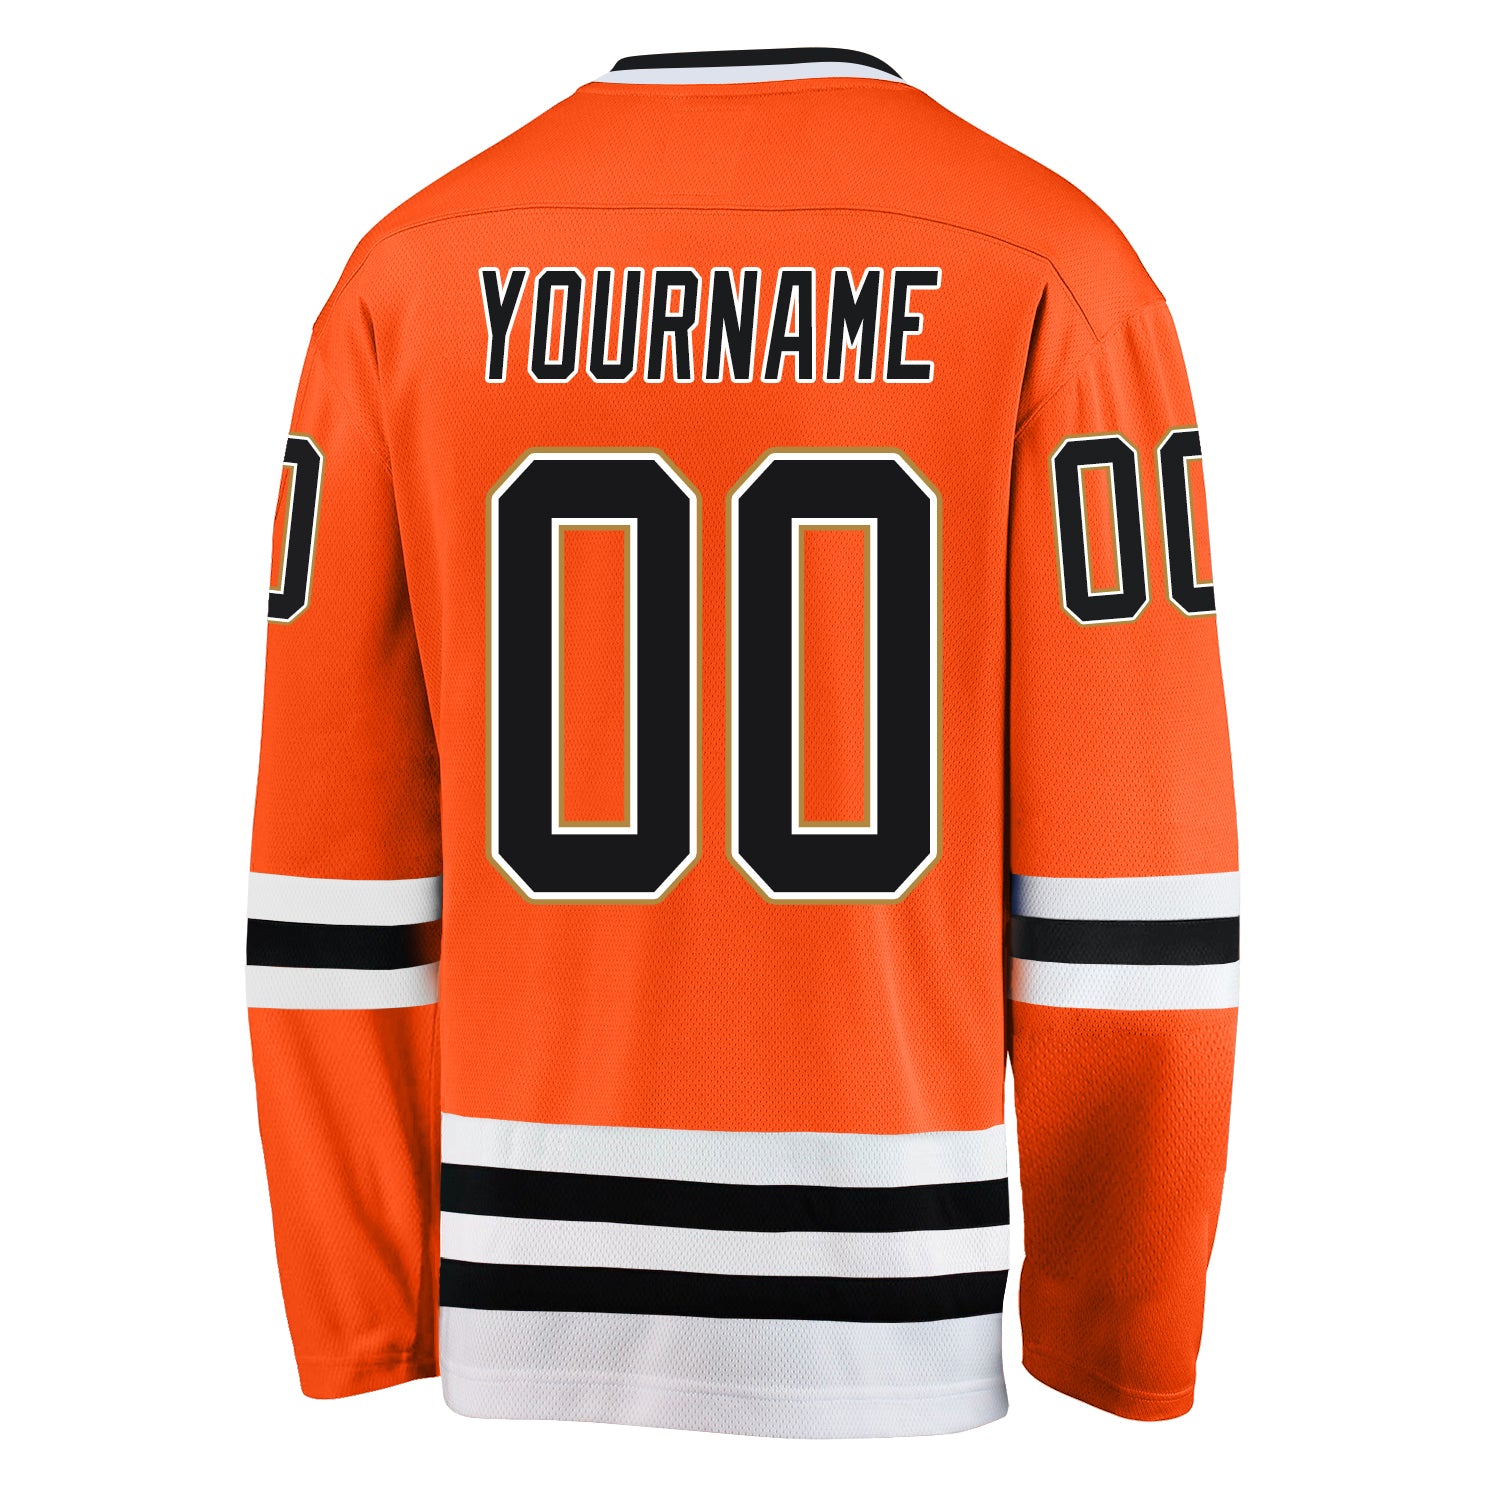 World's Okayest Goalie Hockey Jersey Black/Orange/White